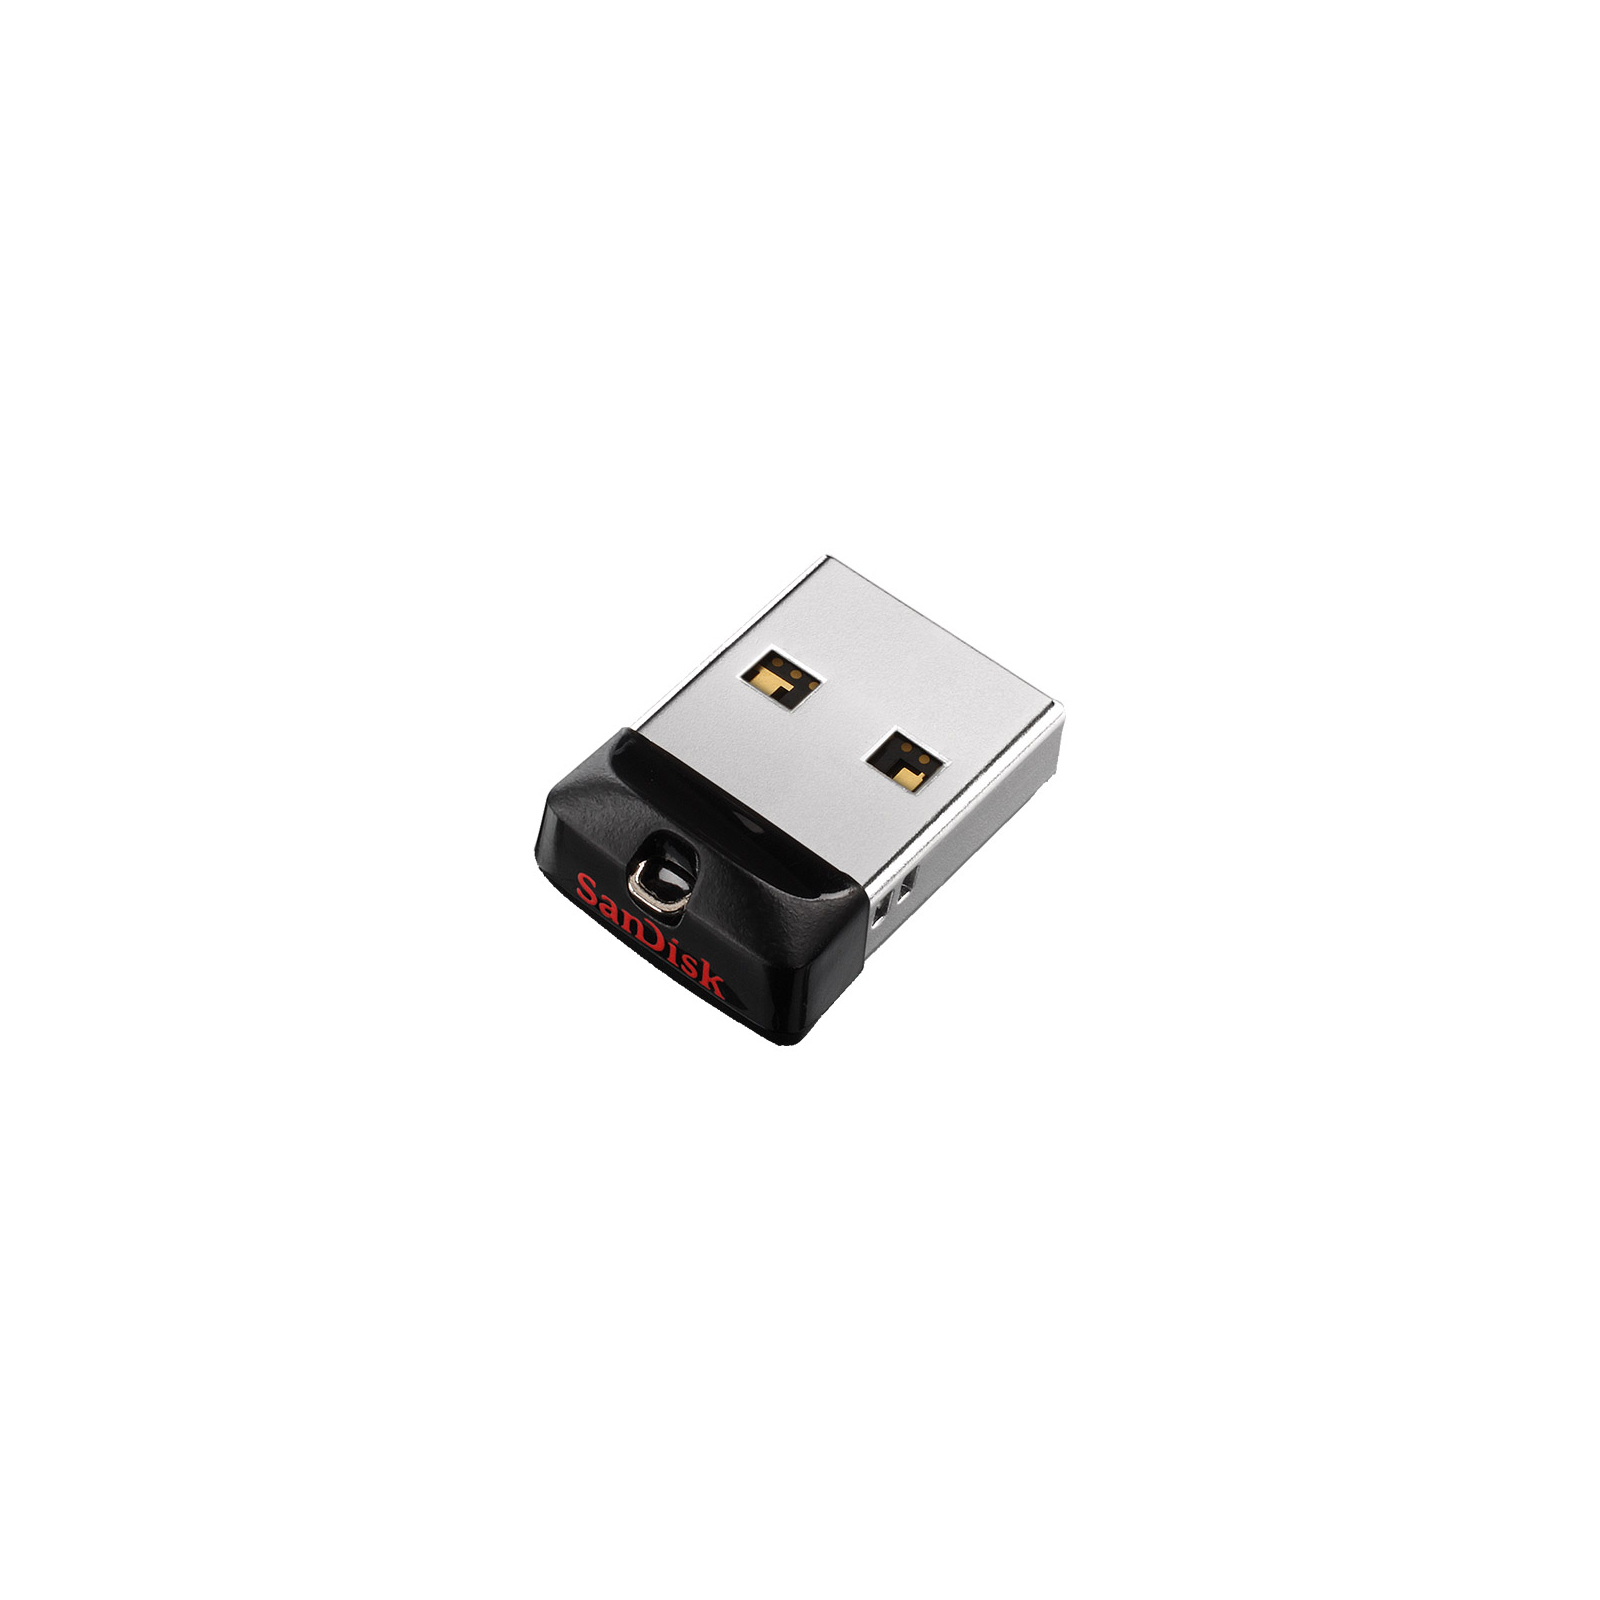 USB флеш накопитель SanDisk 32GB Cruzer Fit USB 2.0 (SDCZ33-032G-G35) изображение 2